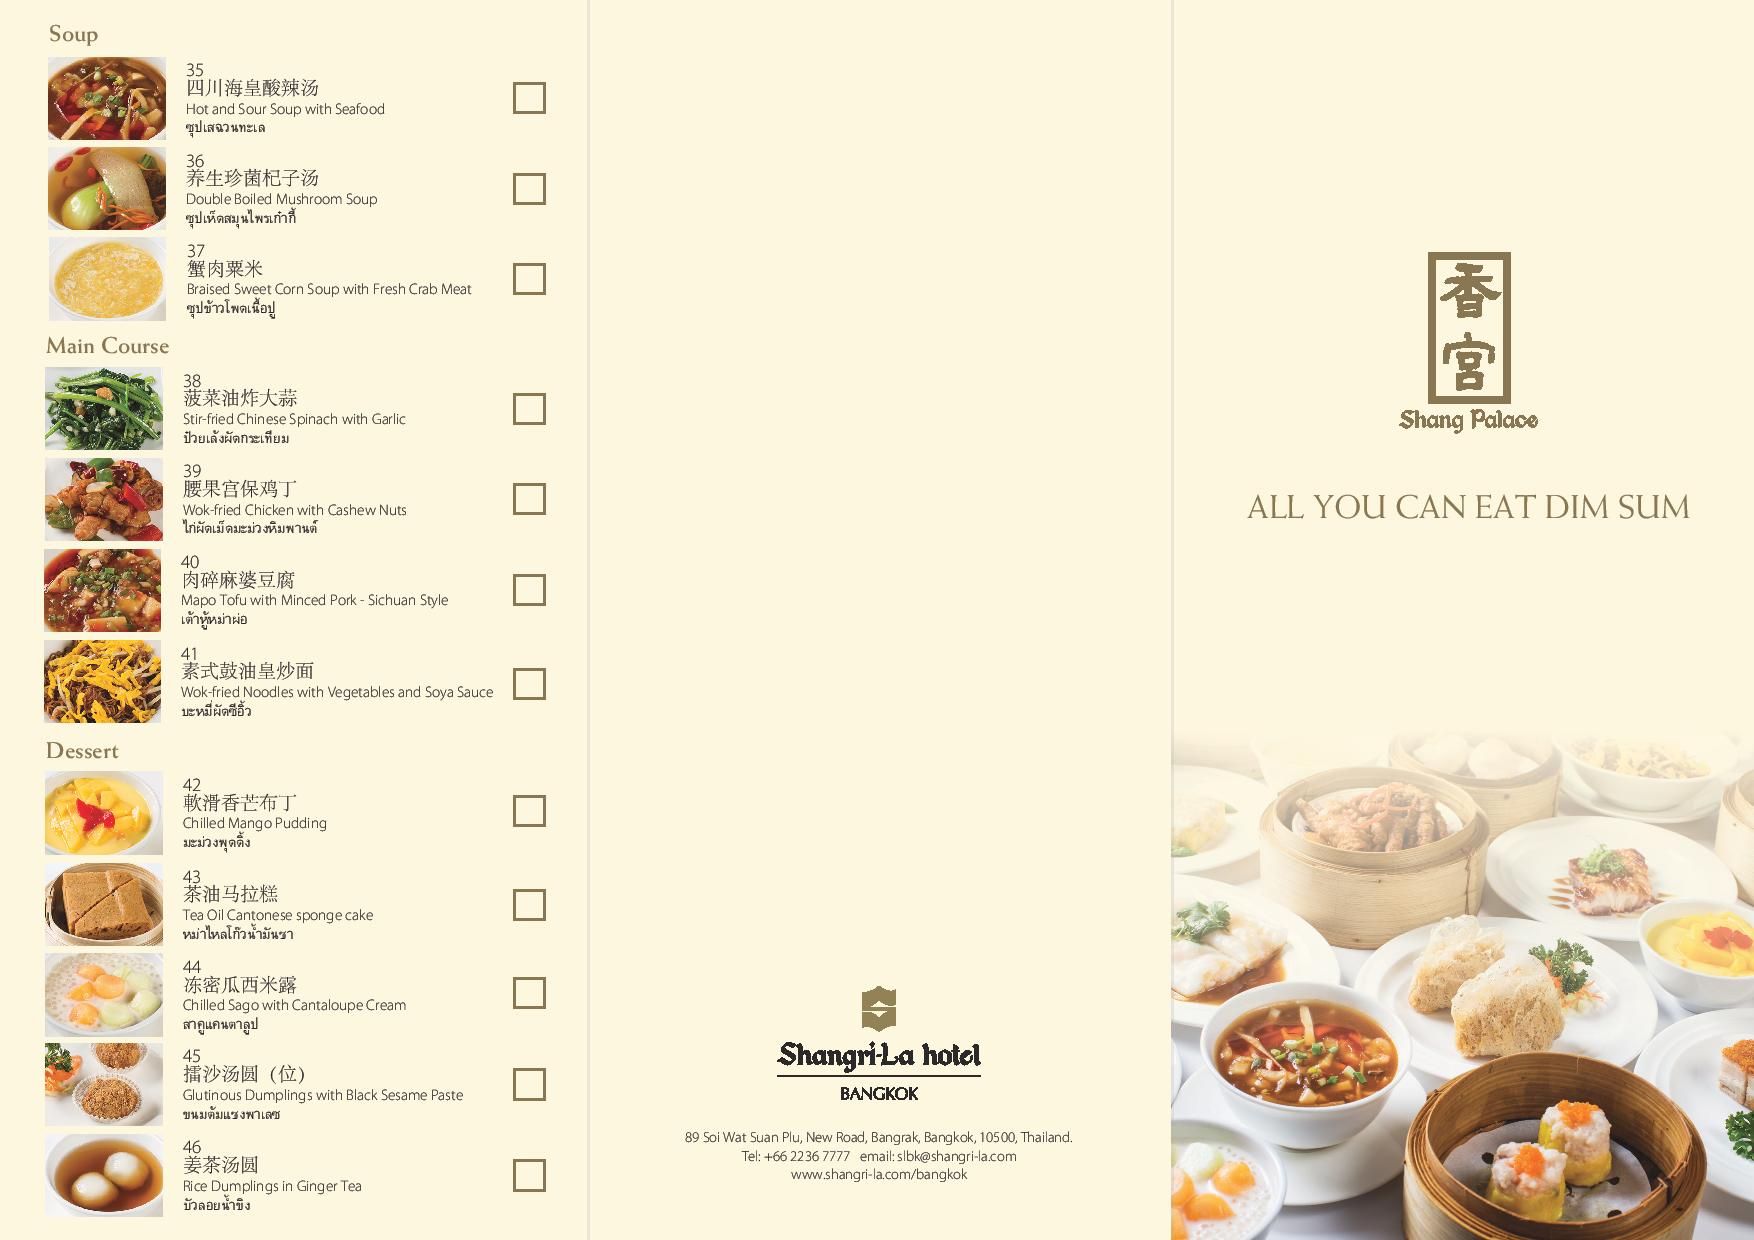 ALL YOU CAN EAT DIM SUM Menu at Shang Palace page 001